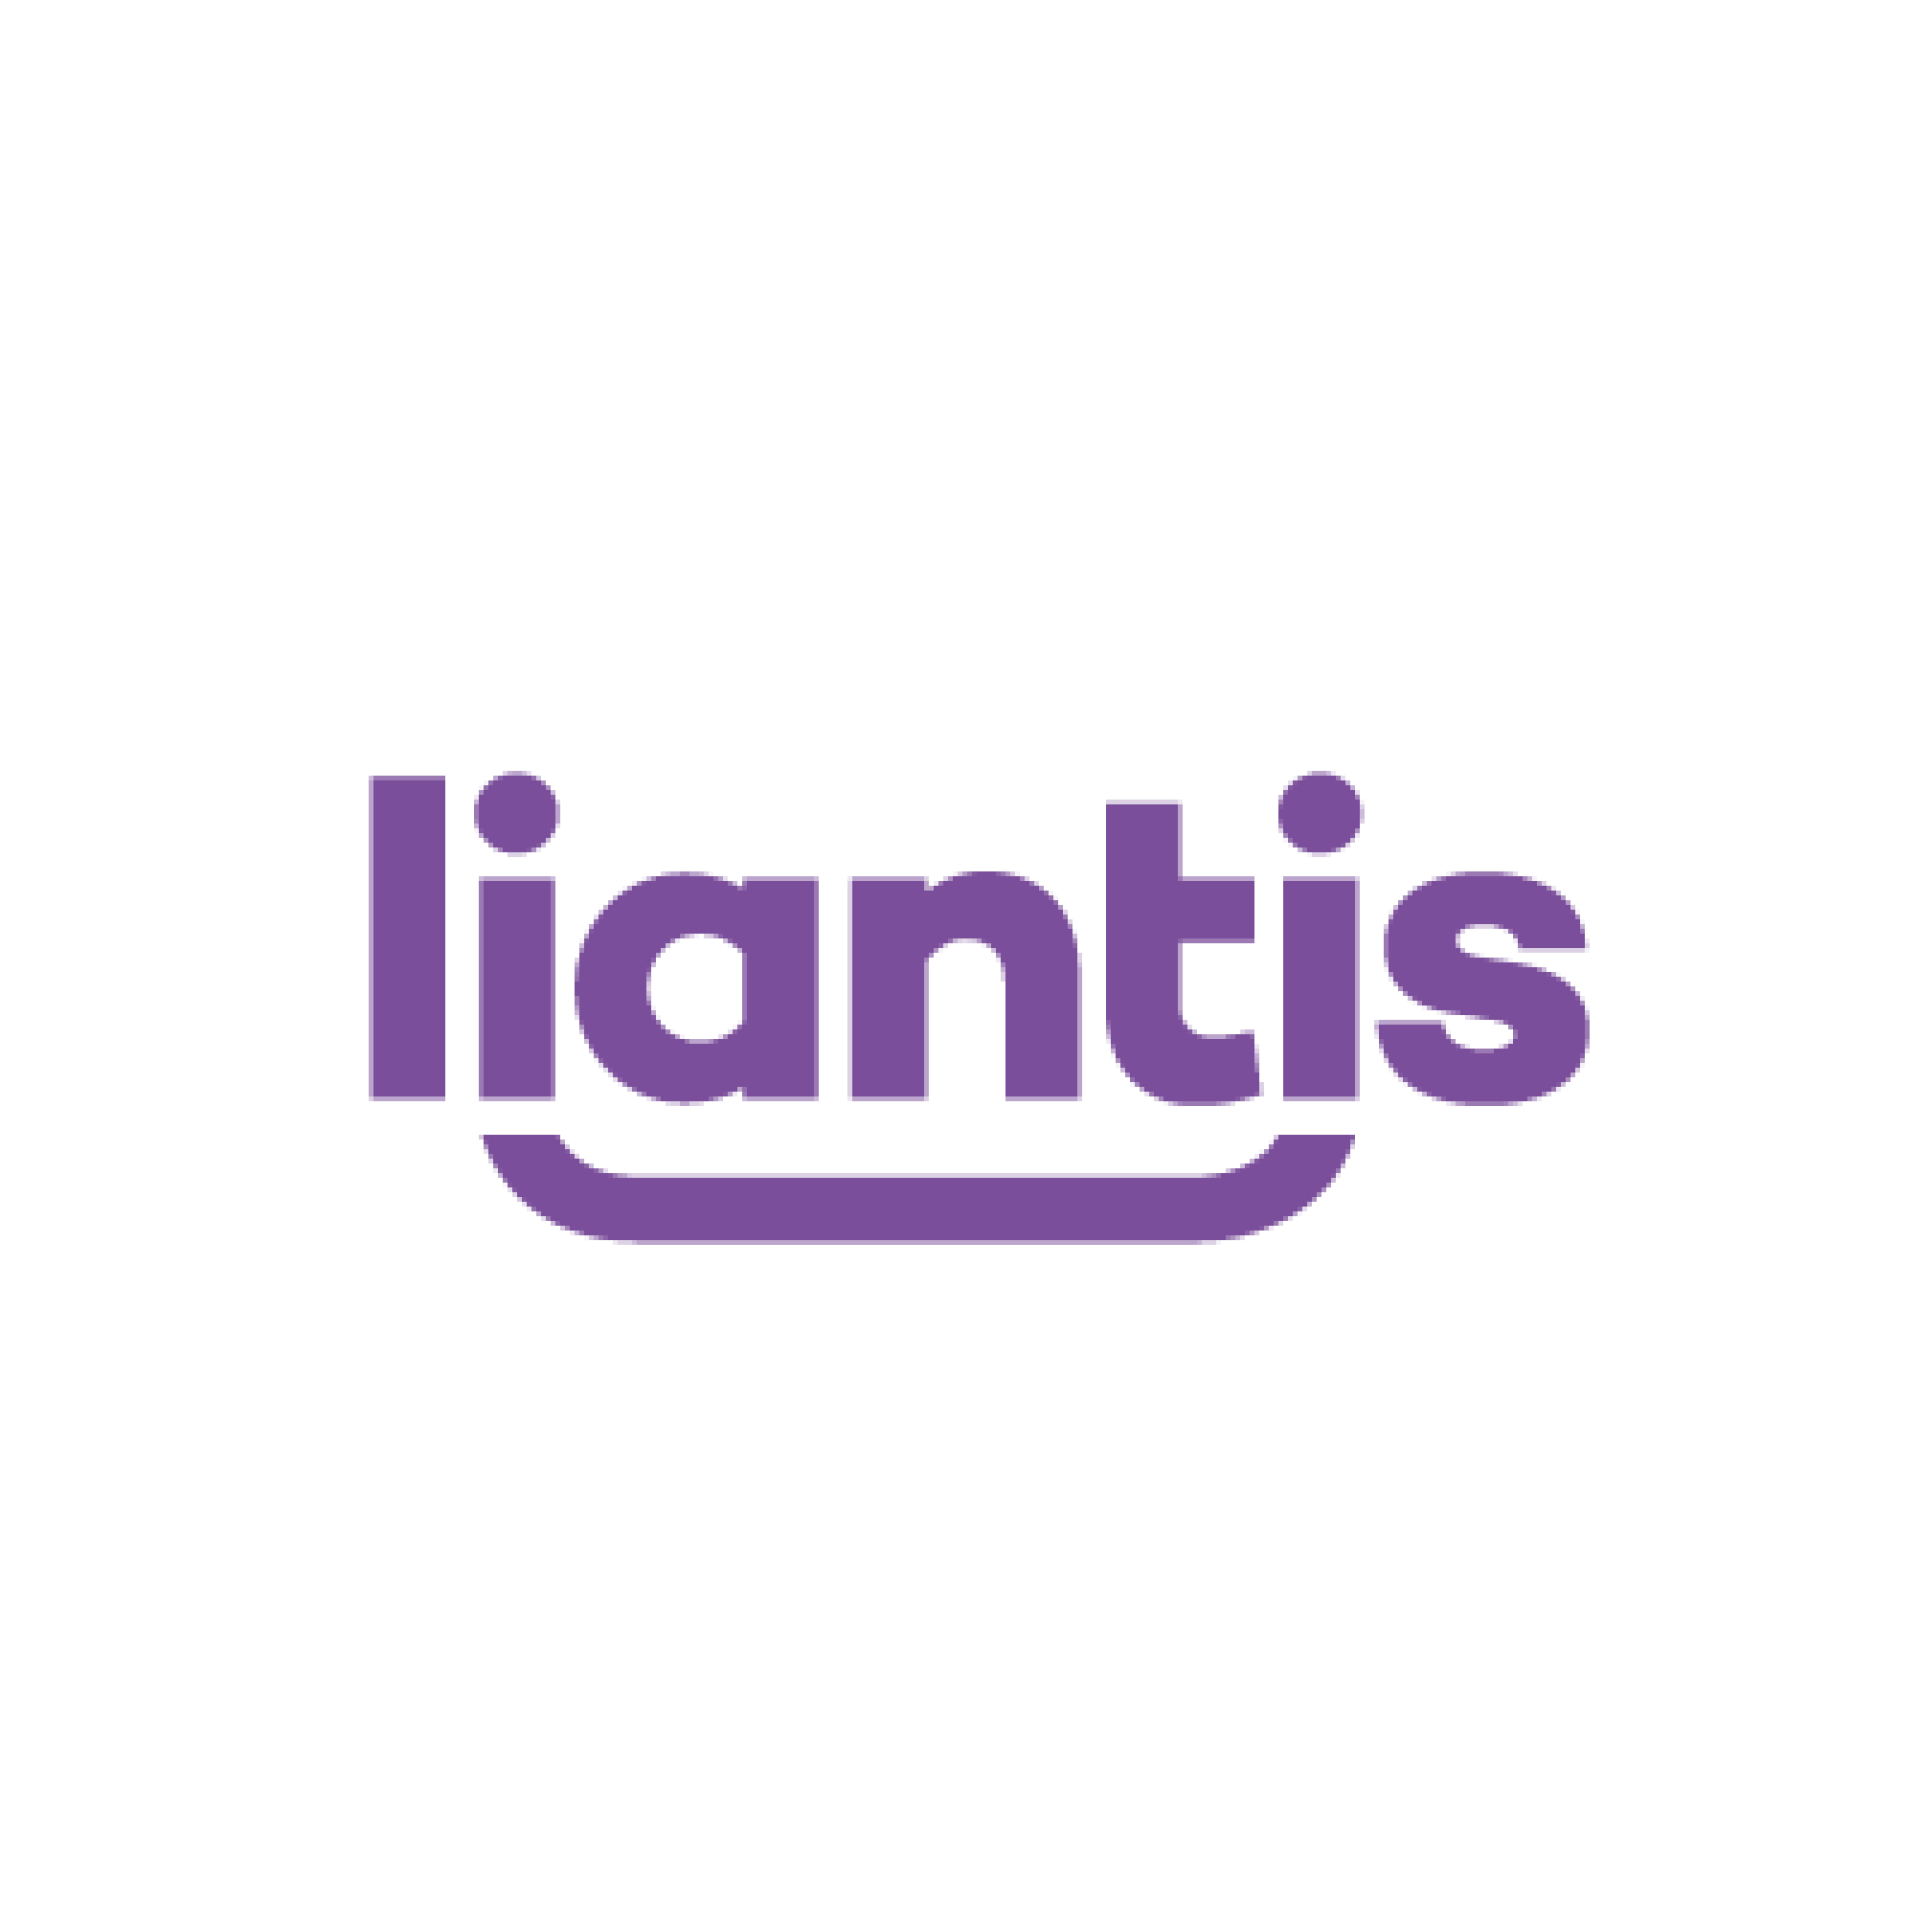 Logo liantis 400x400px